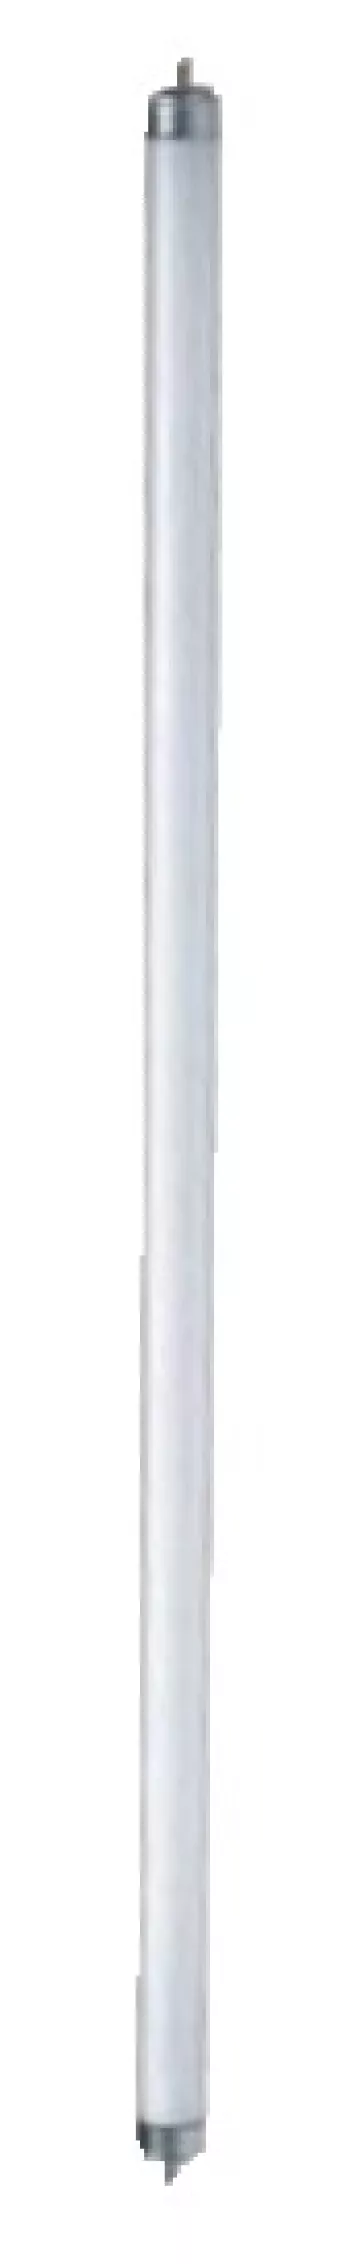 Marbel Лампа T5, 220В, 54Вт, 3000K, энергосберегающая